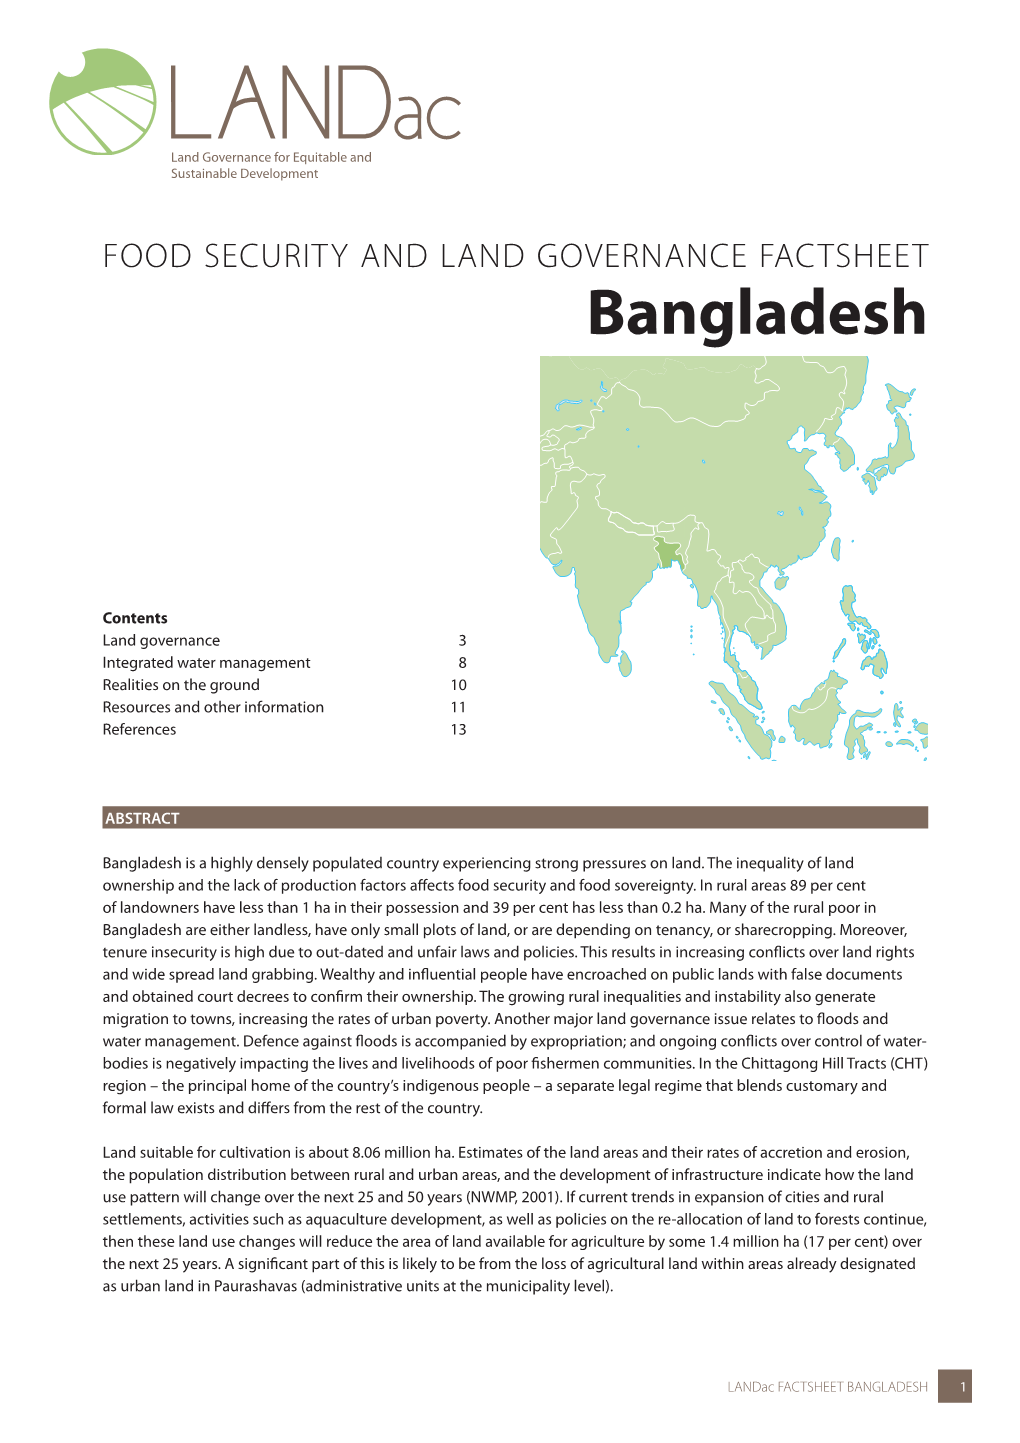 Country Factsheet Bangladesh